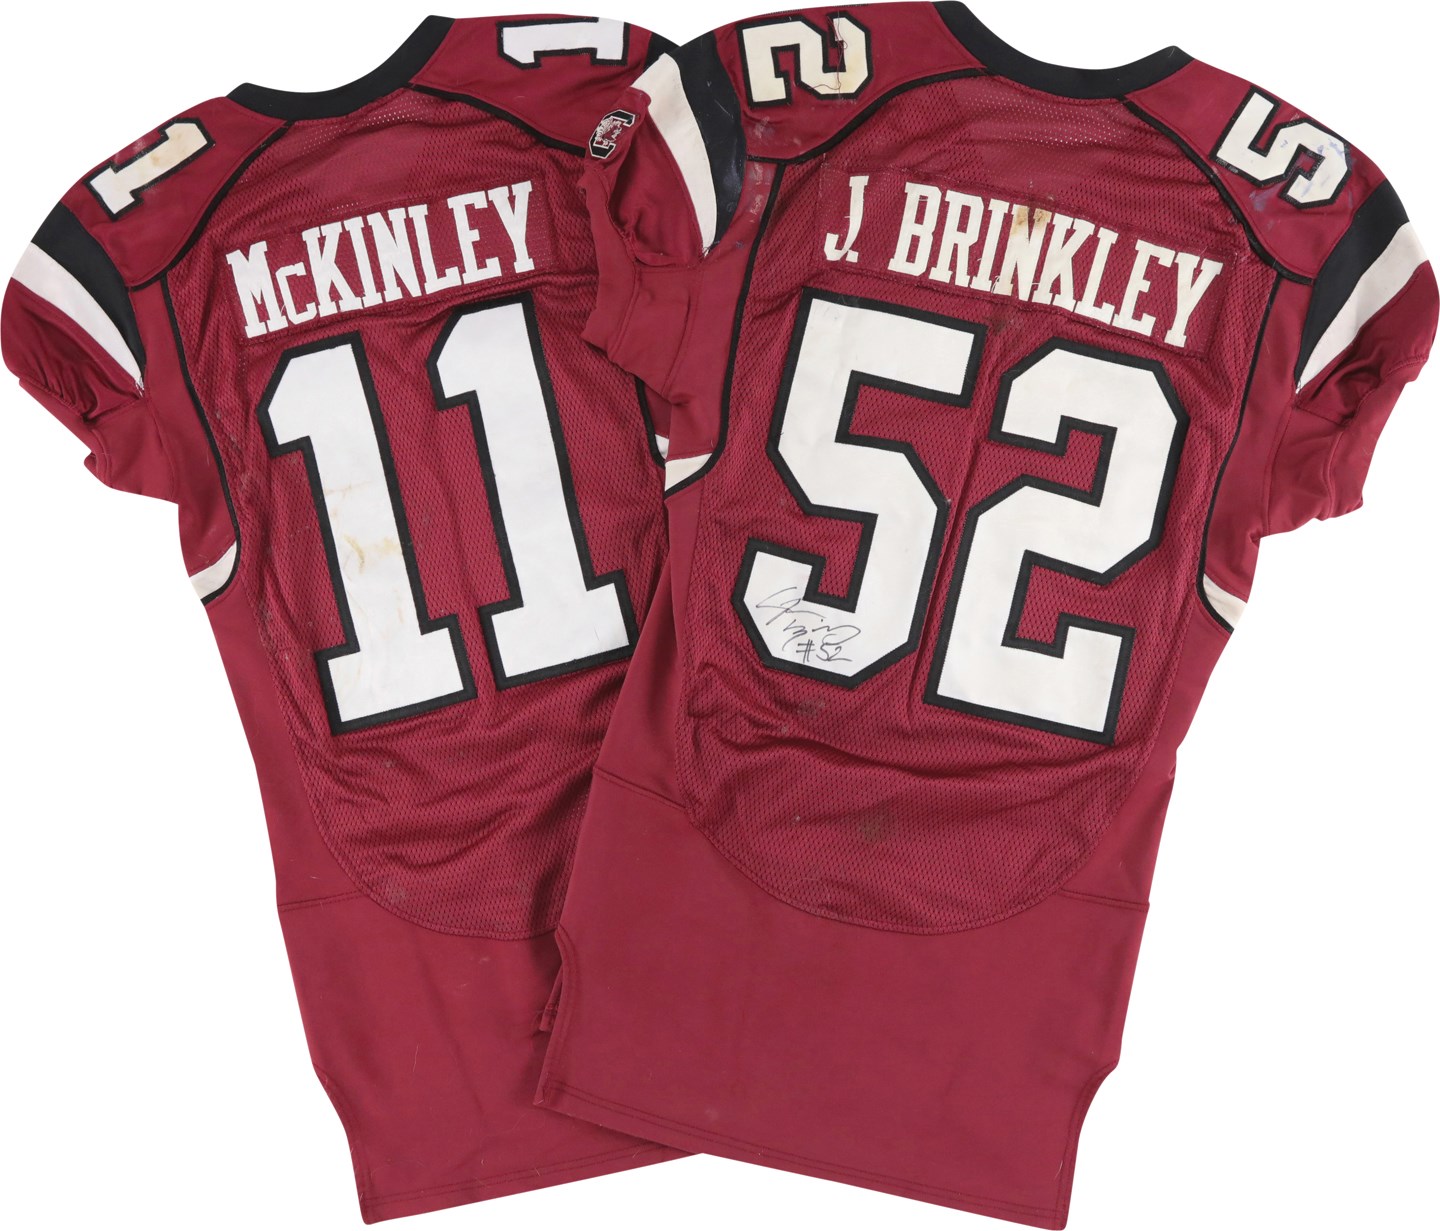 Football - Circa 2007 Kenny McKinley and Jasper Brinkley South Carolina Co-Captains Game Worn Jerseys